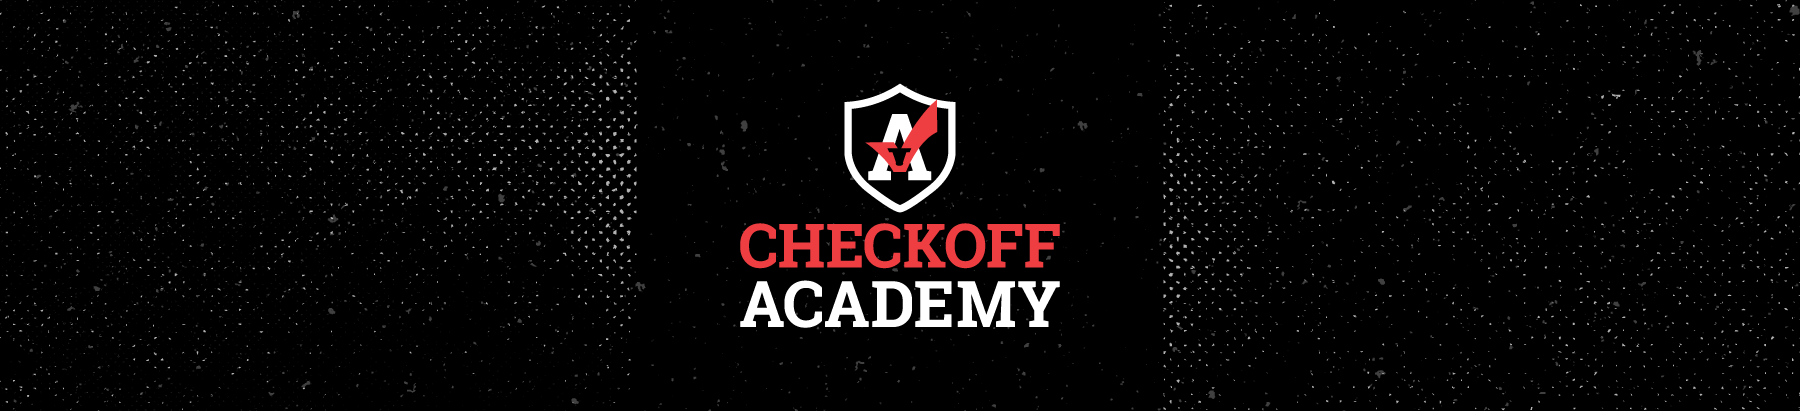 Checkoff Academy